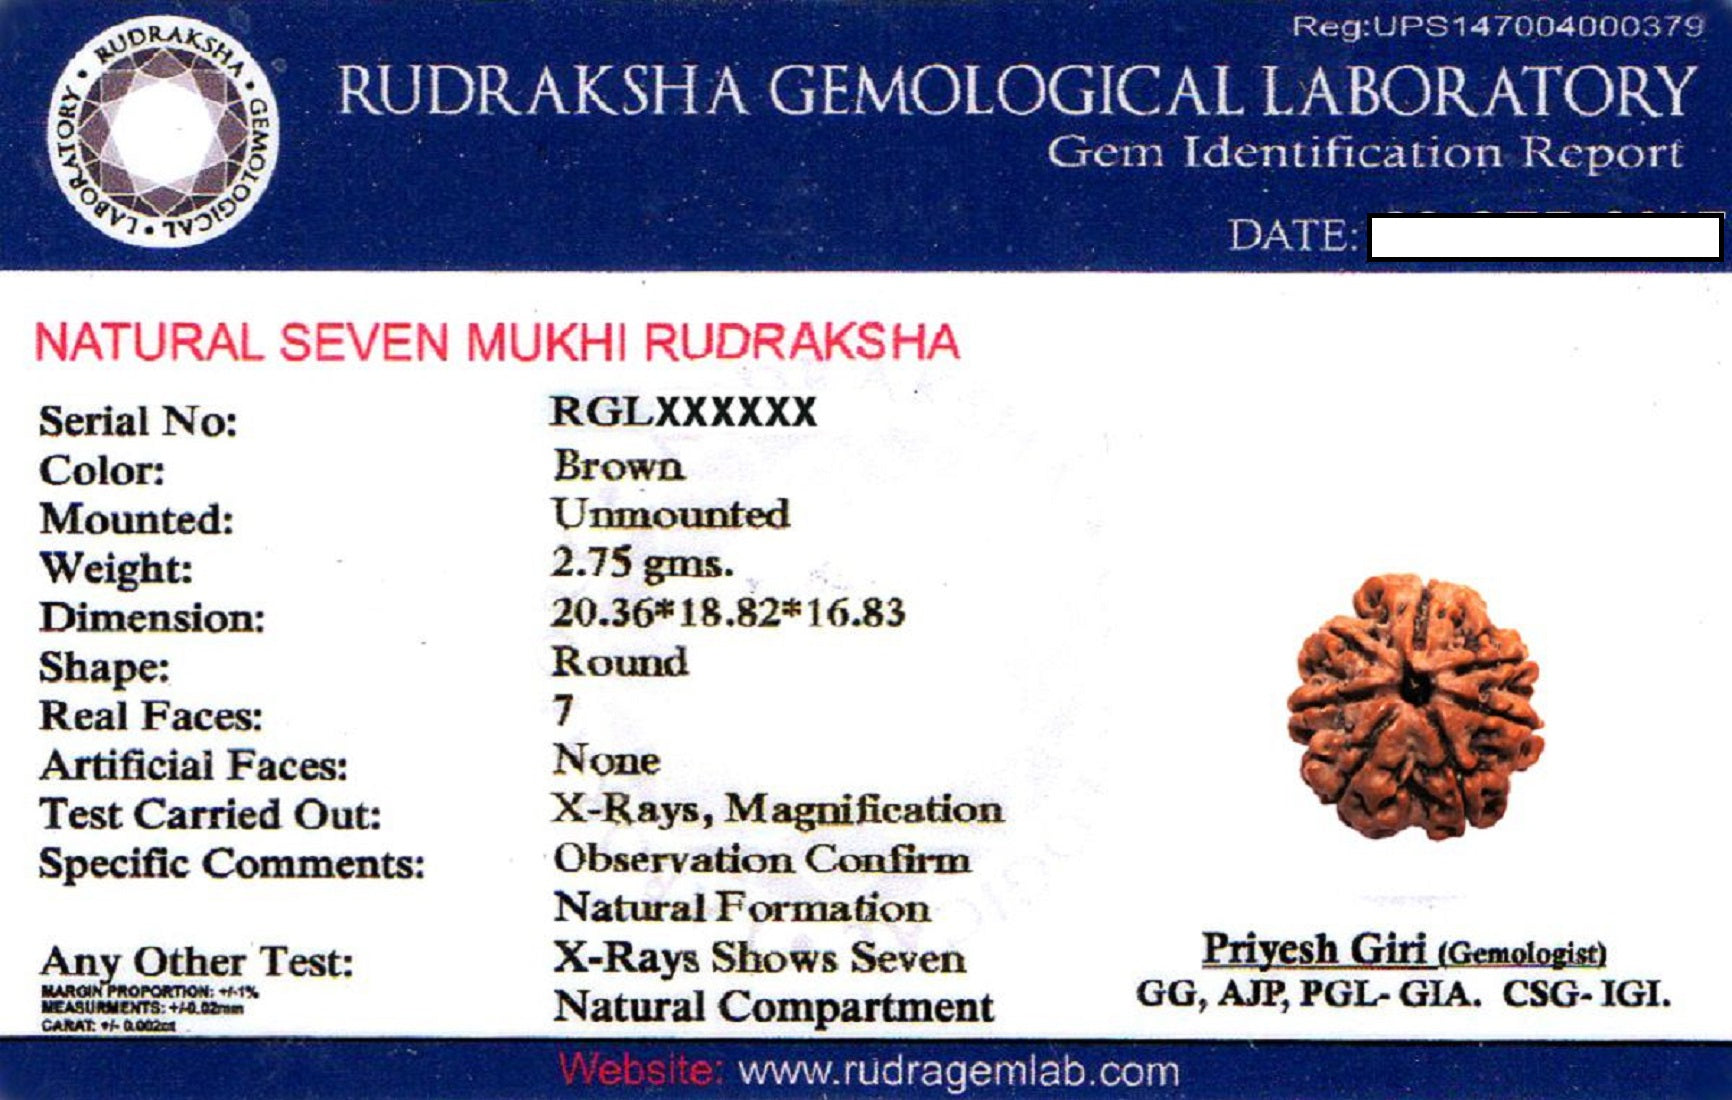 certified rudraksha